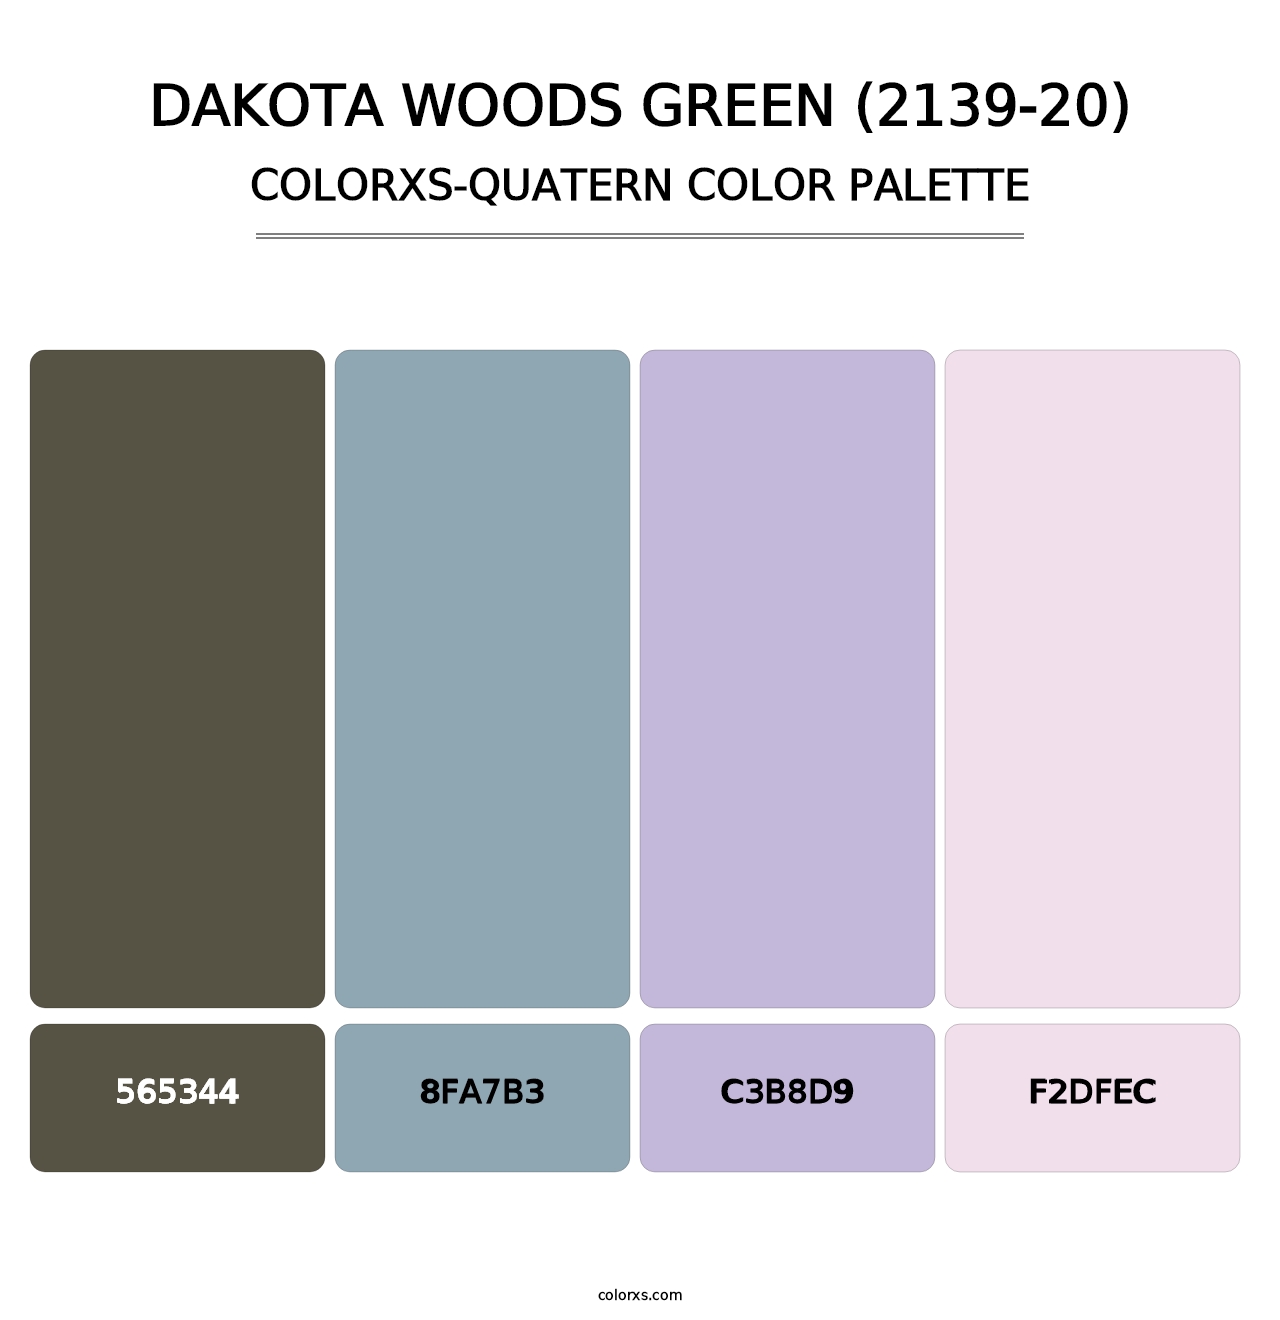 Dakota Woods Green (2139-20) - Colorxs Quatern Palette